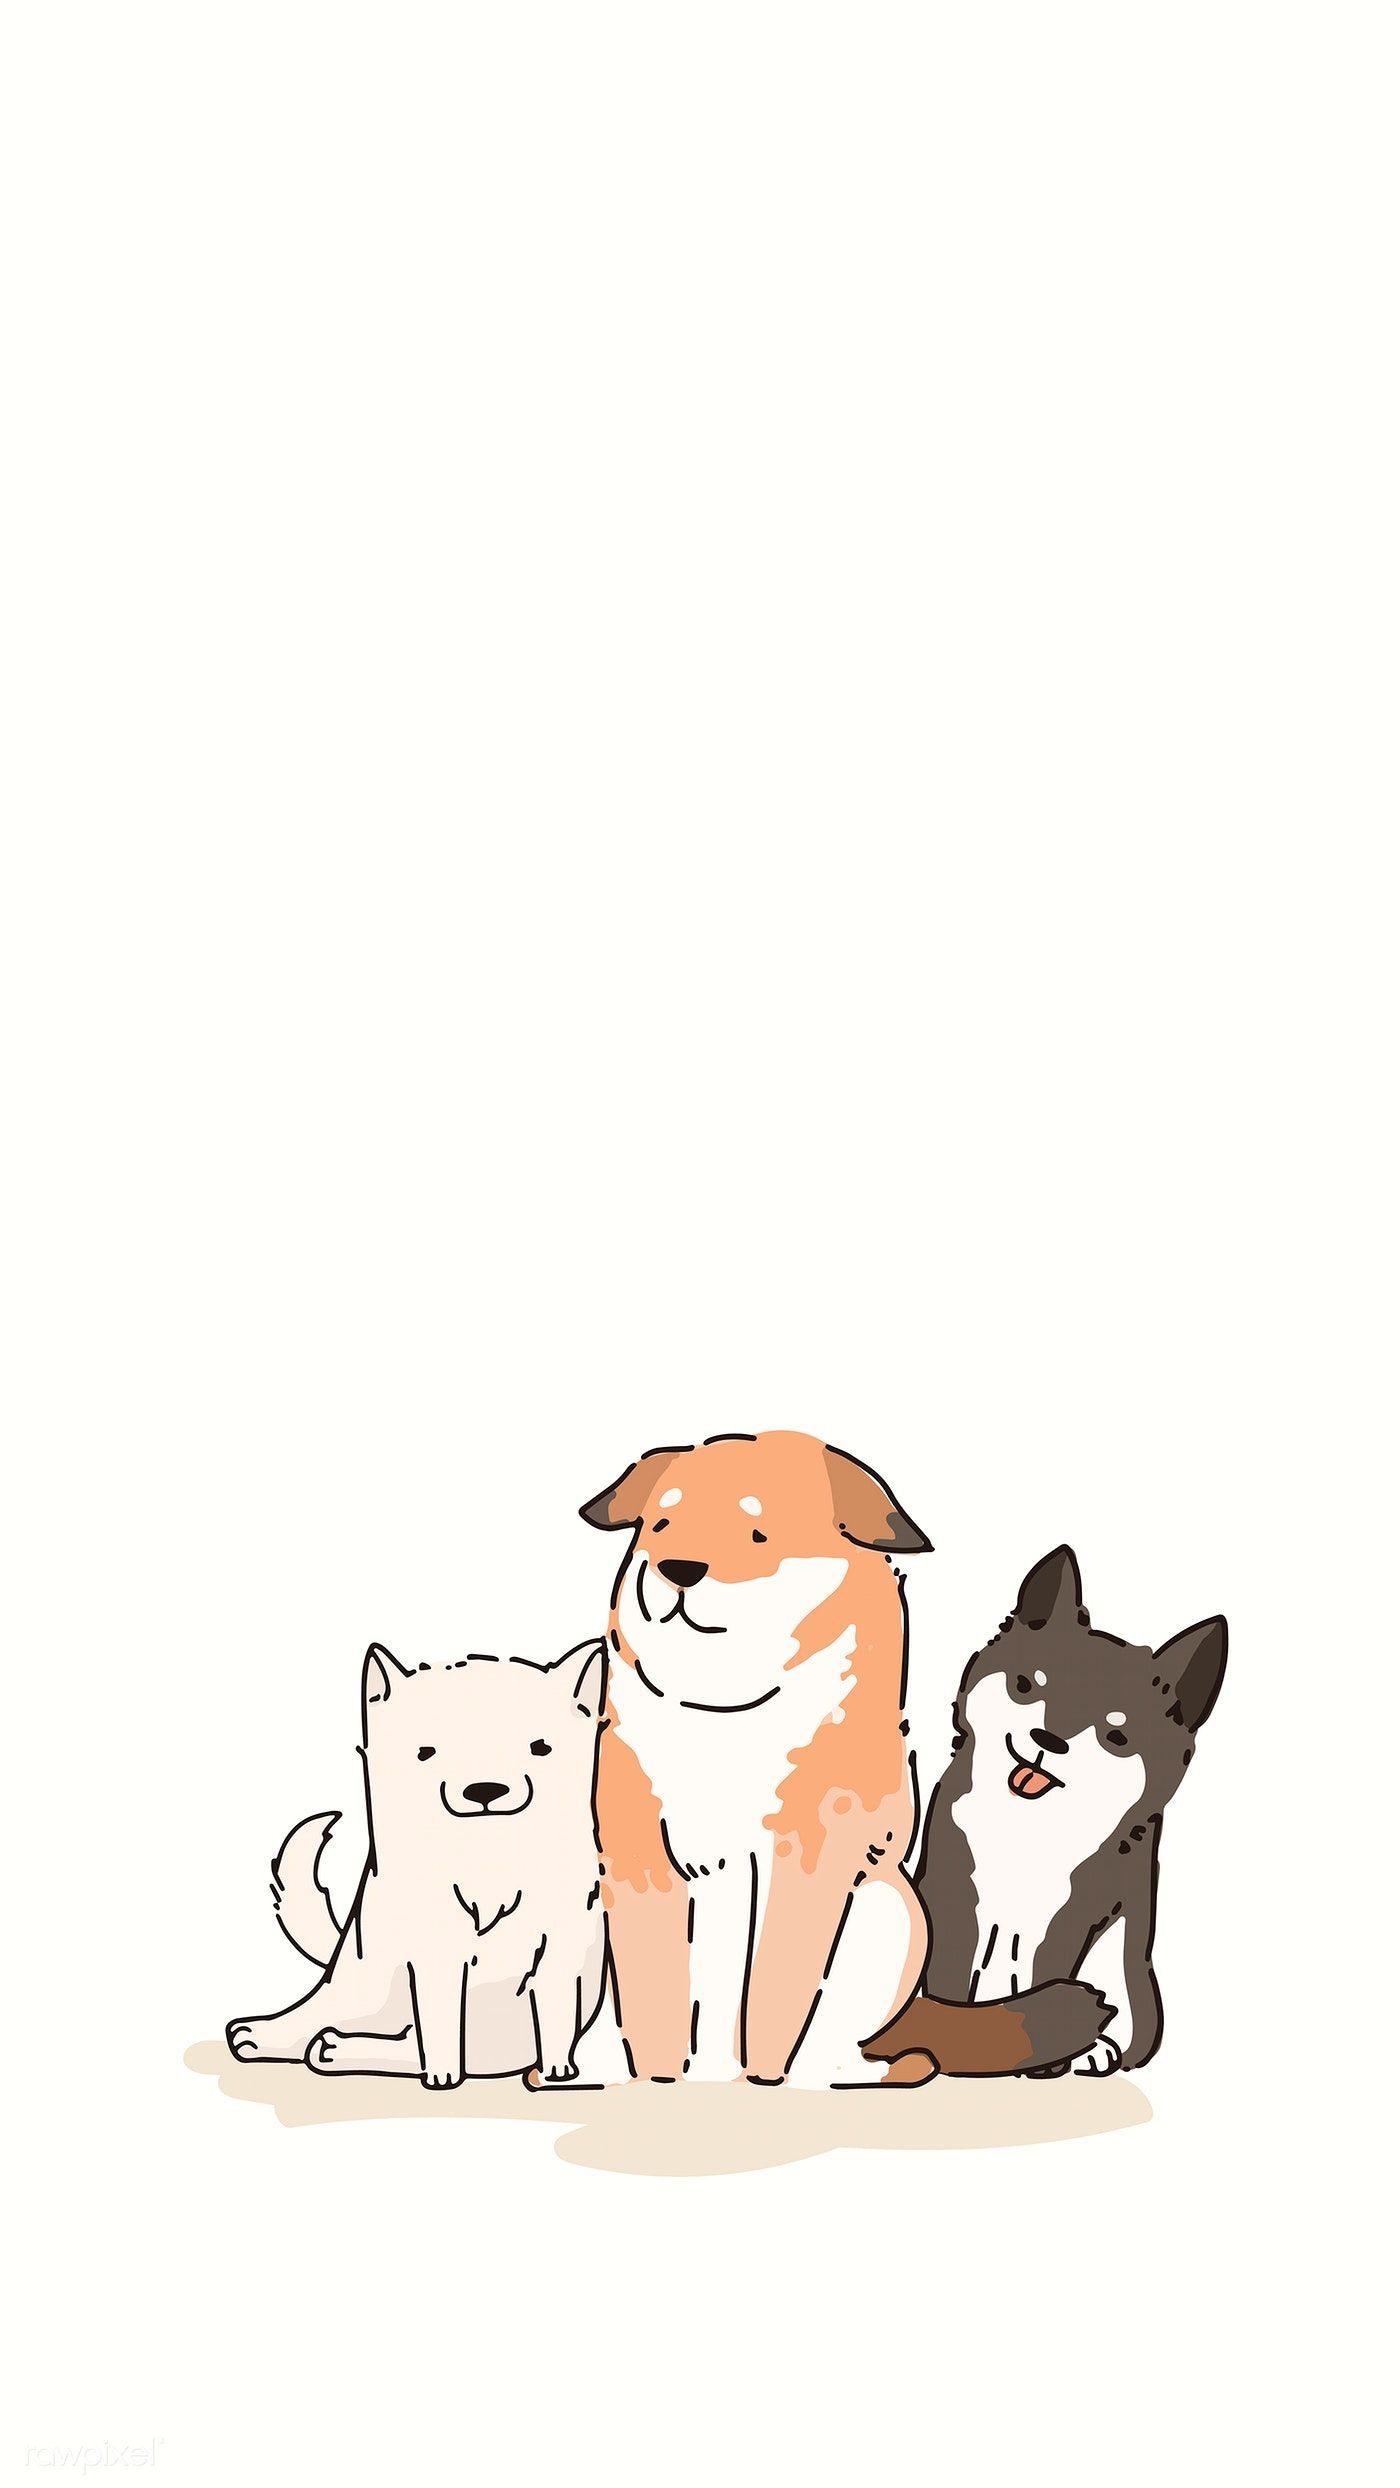 Spitz dogs doodle element vector. premium image / Niwat. Dog wallpaper iphone, Dog wallpaper, Cute dog wallpaper